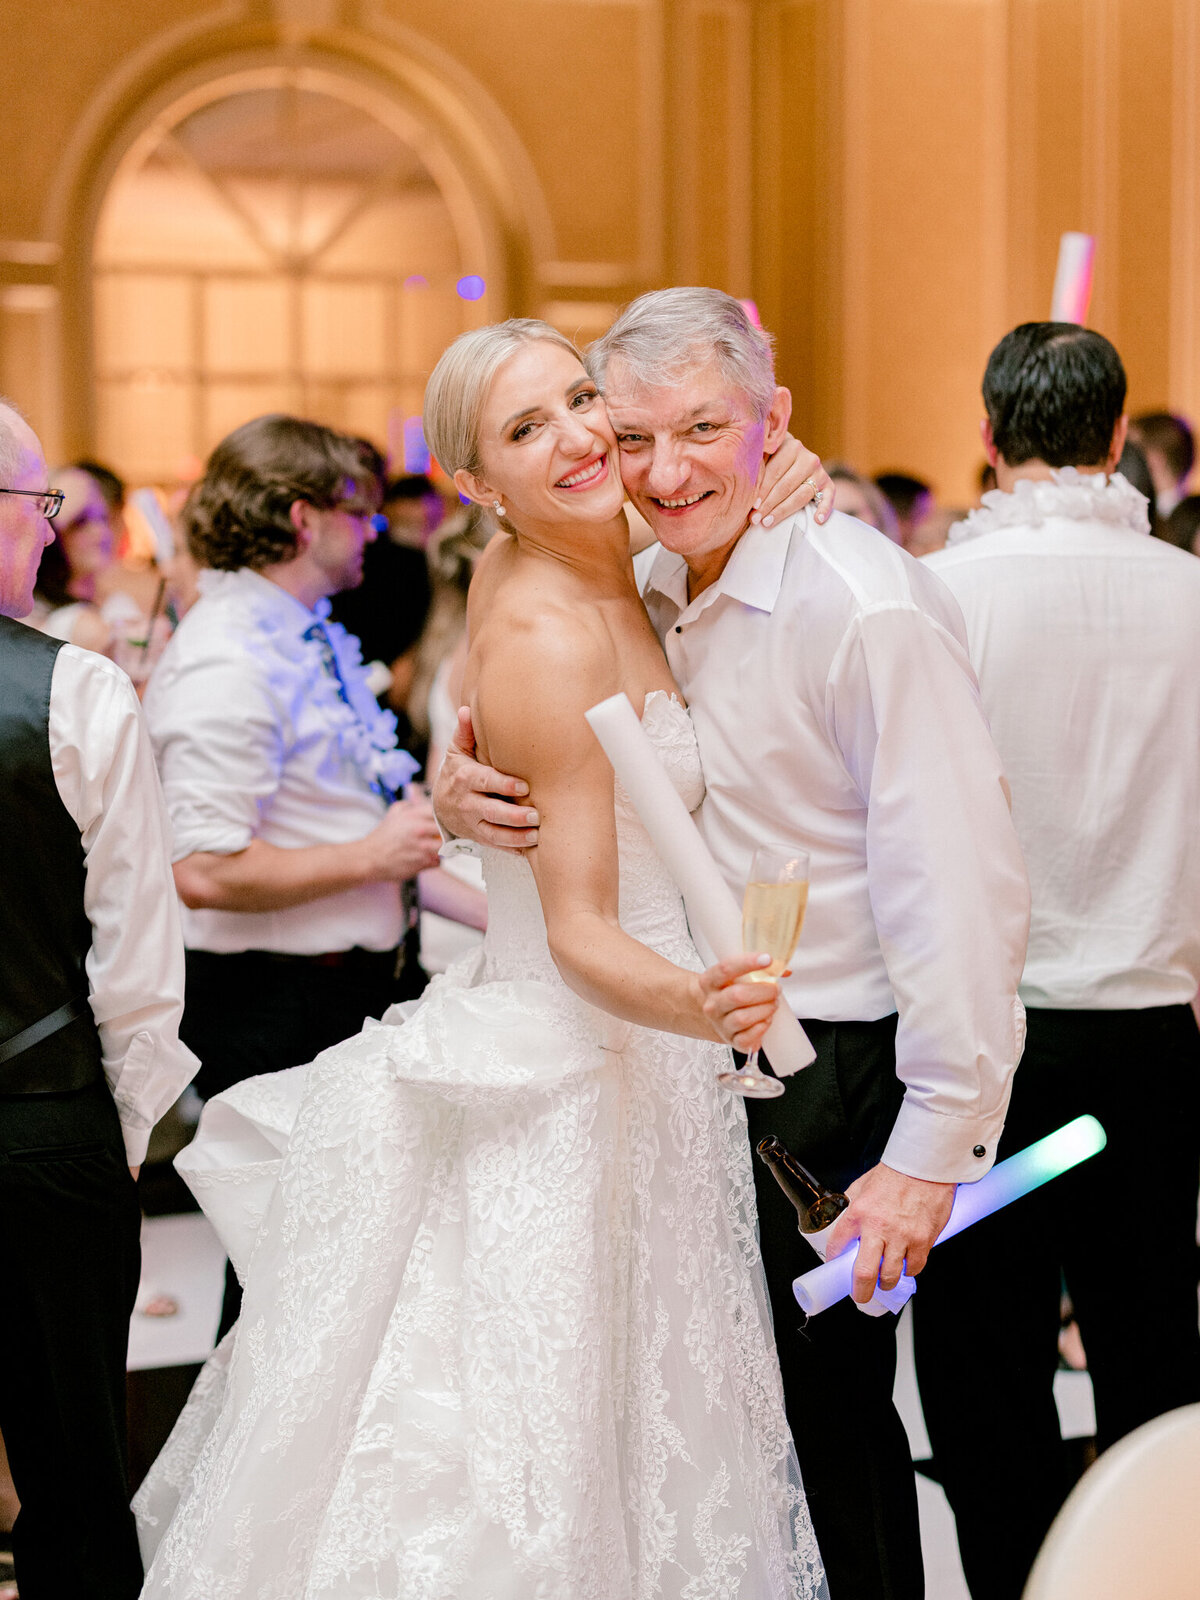 Katelyn & Kyle's Wedding at the Adolphus Hotel | Dallas Wedding Photographer | Sami Kathryn Photography-330